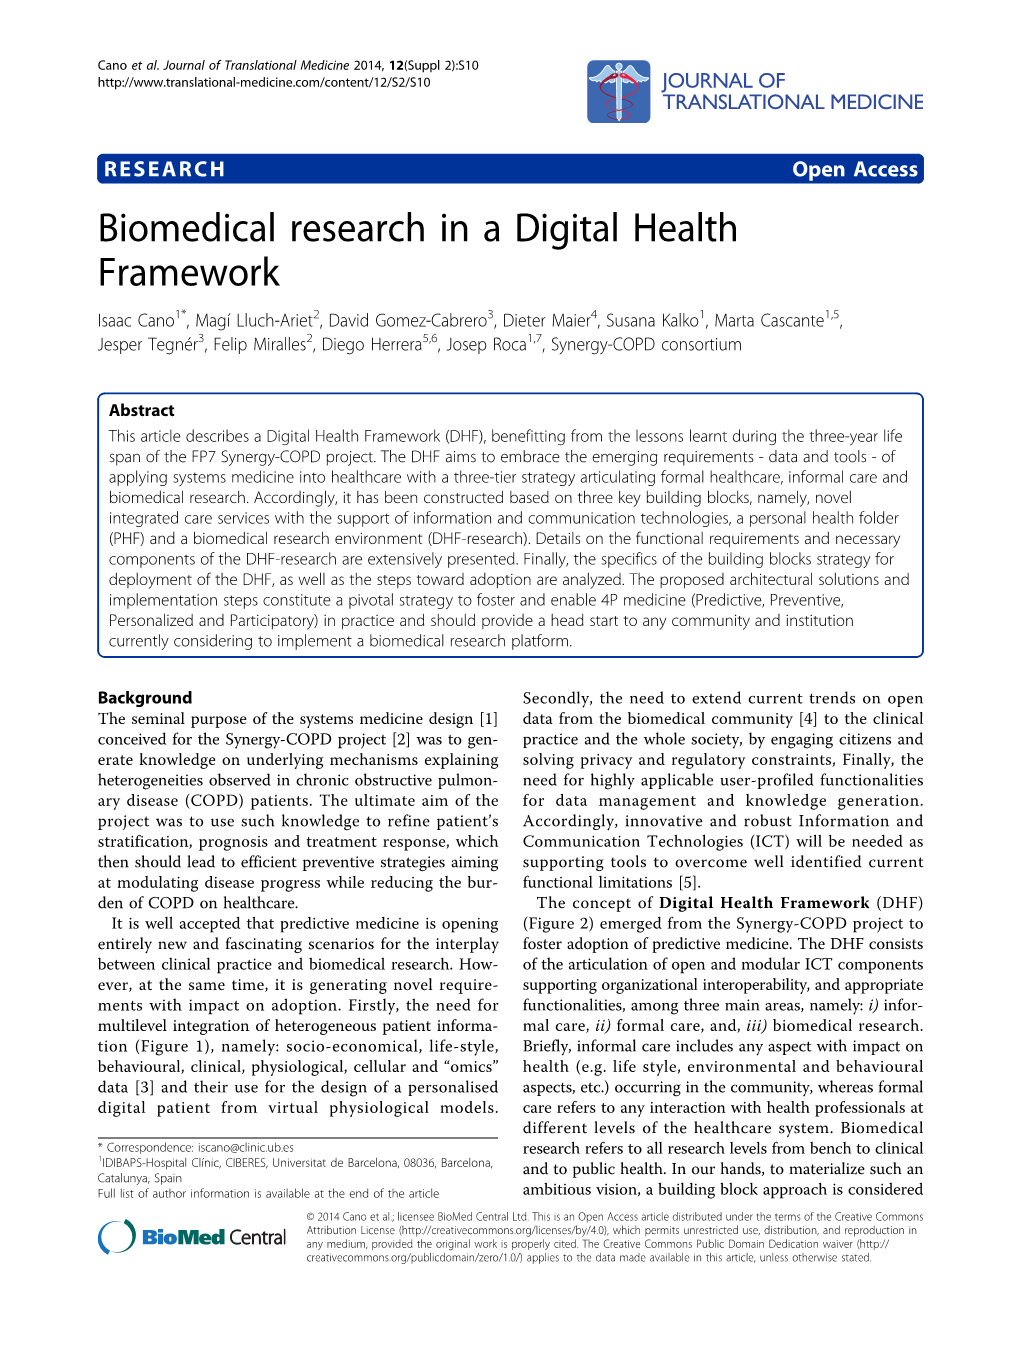 Biomedical Research in a Digital Health Framework